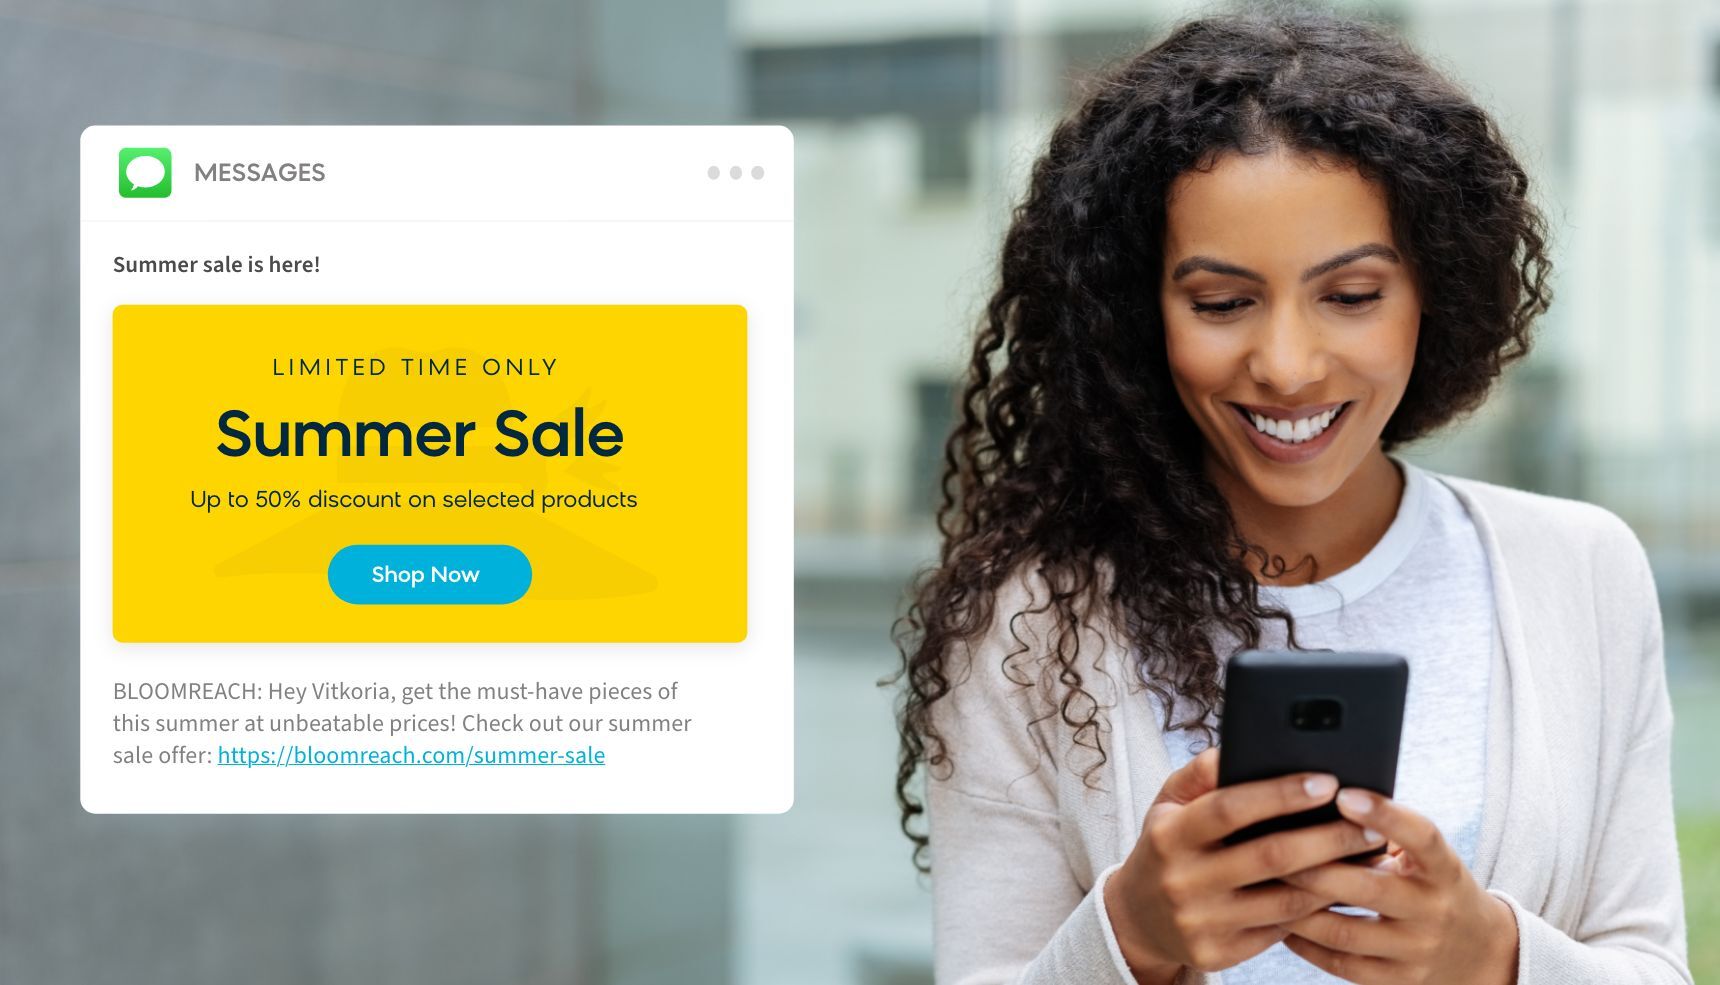 A customer receiving an MMs marketing message promoting a summer sale announcement